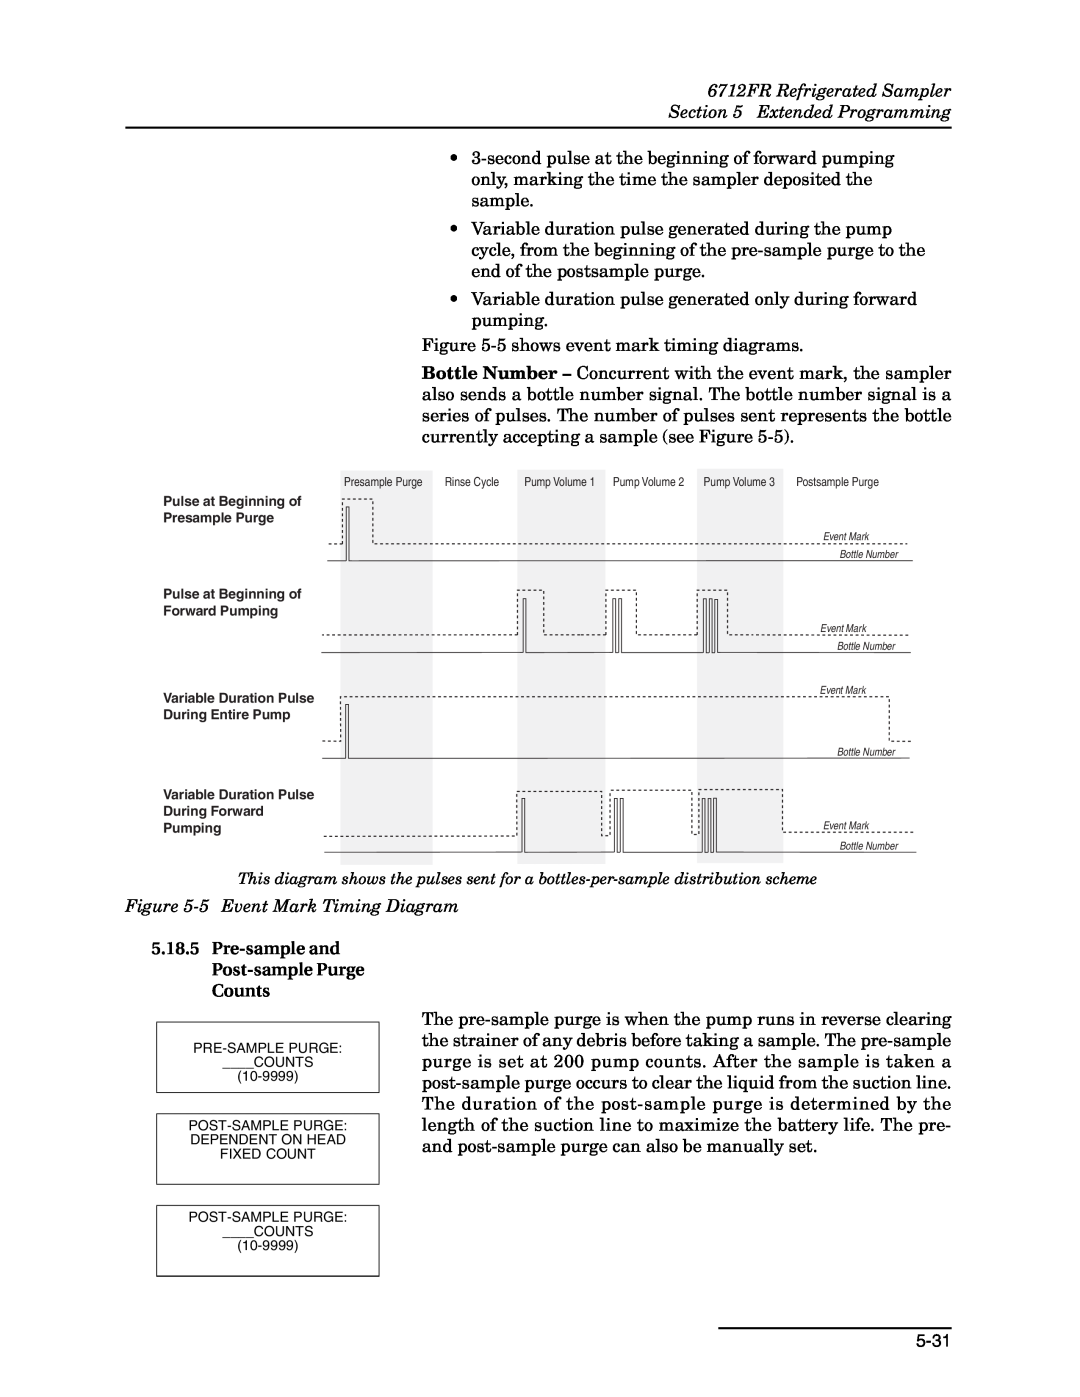 Teledyne manual 6712FR Refrigerated Sampler Extended Programming, 5 Event Mark Timing Diagram 